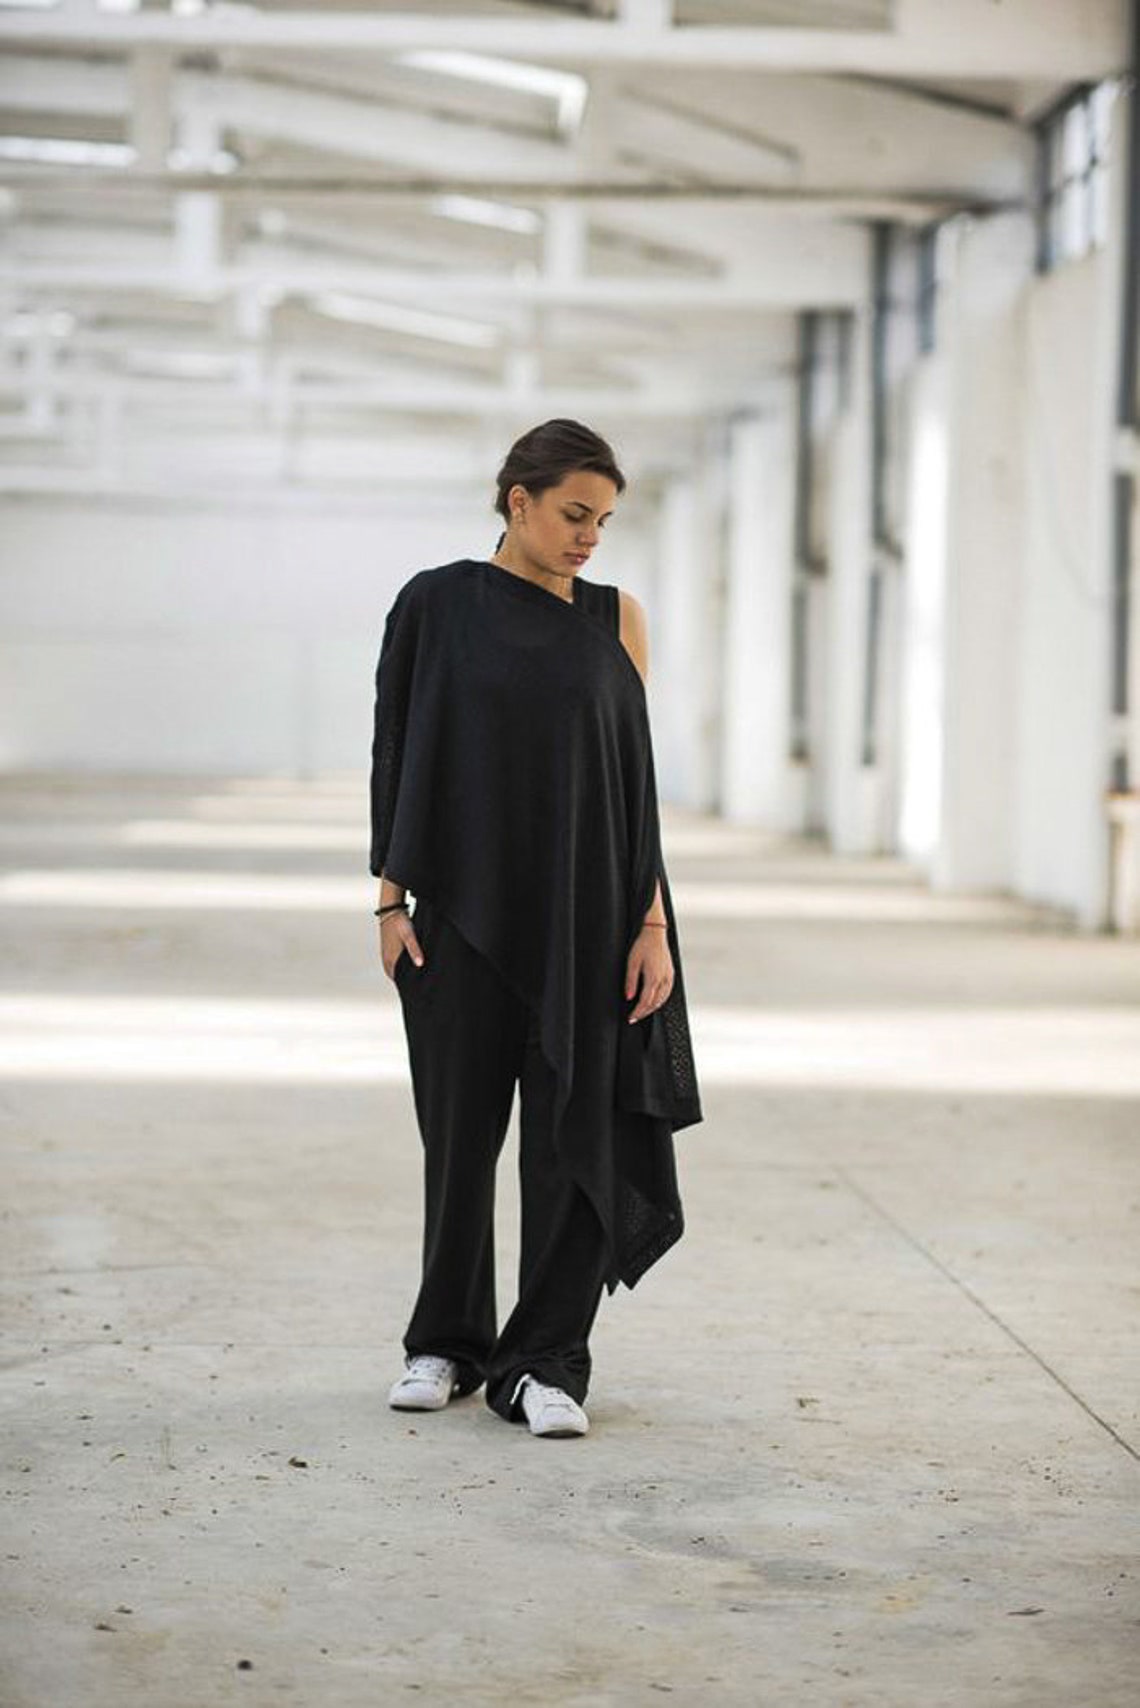 Women Poncho Cape Overall Plus Size Clothing Black Poncho | Etsy